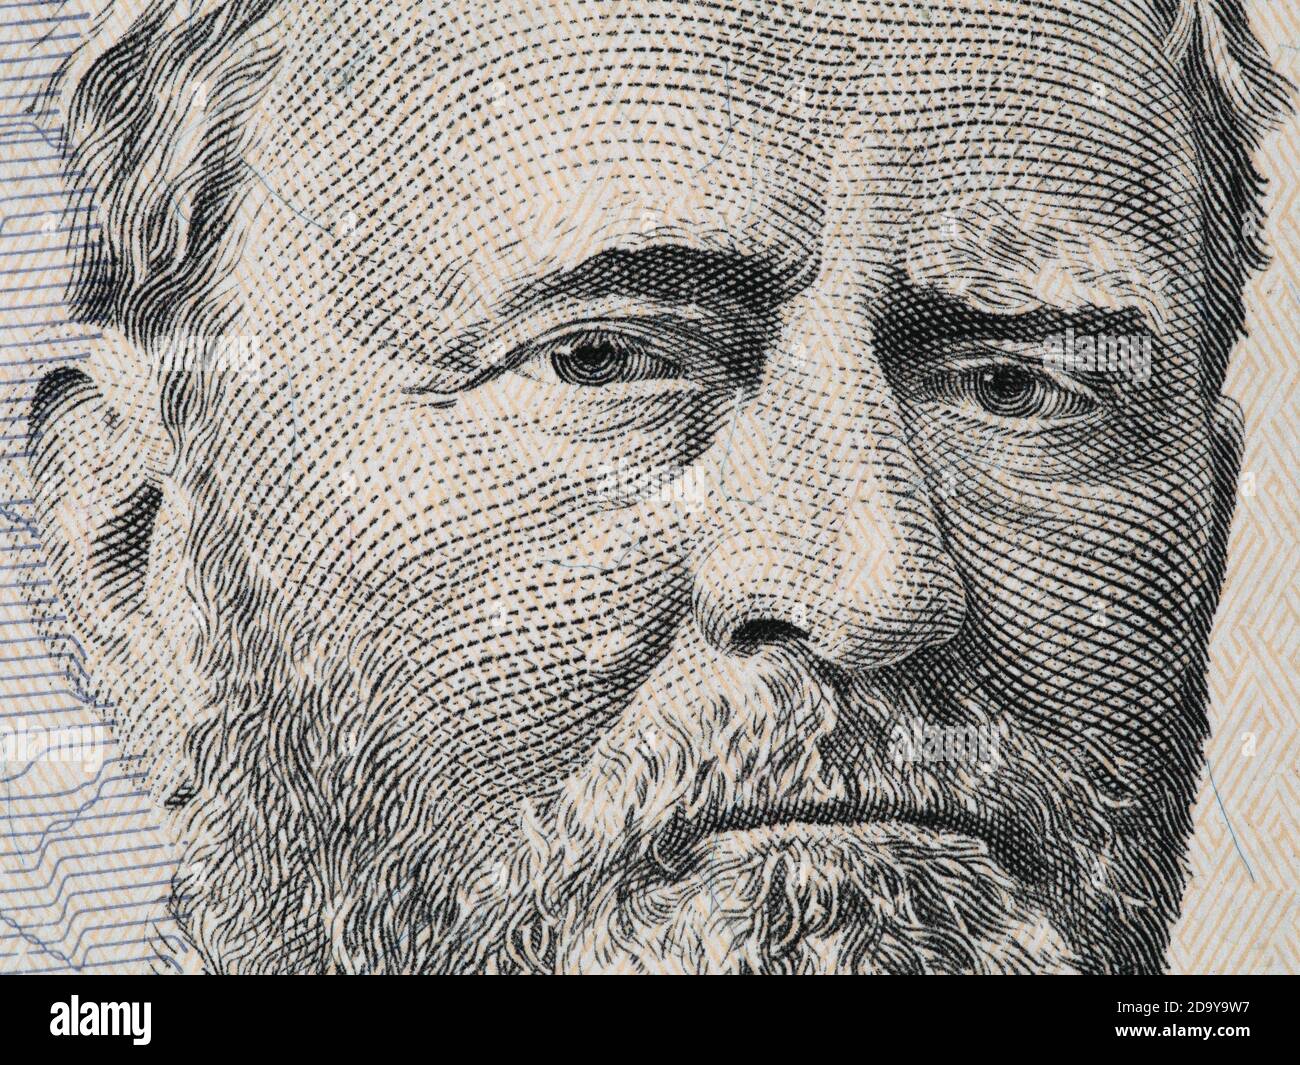 Ulysses Grant us president face on fifty dollar bill macro, united states money closeup Stock Photo